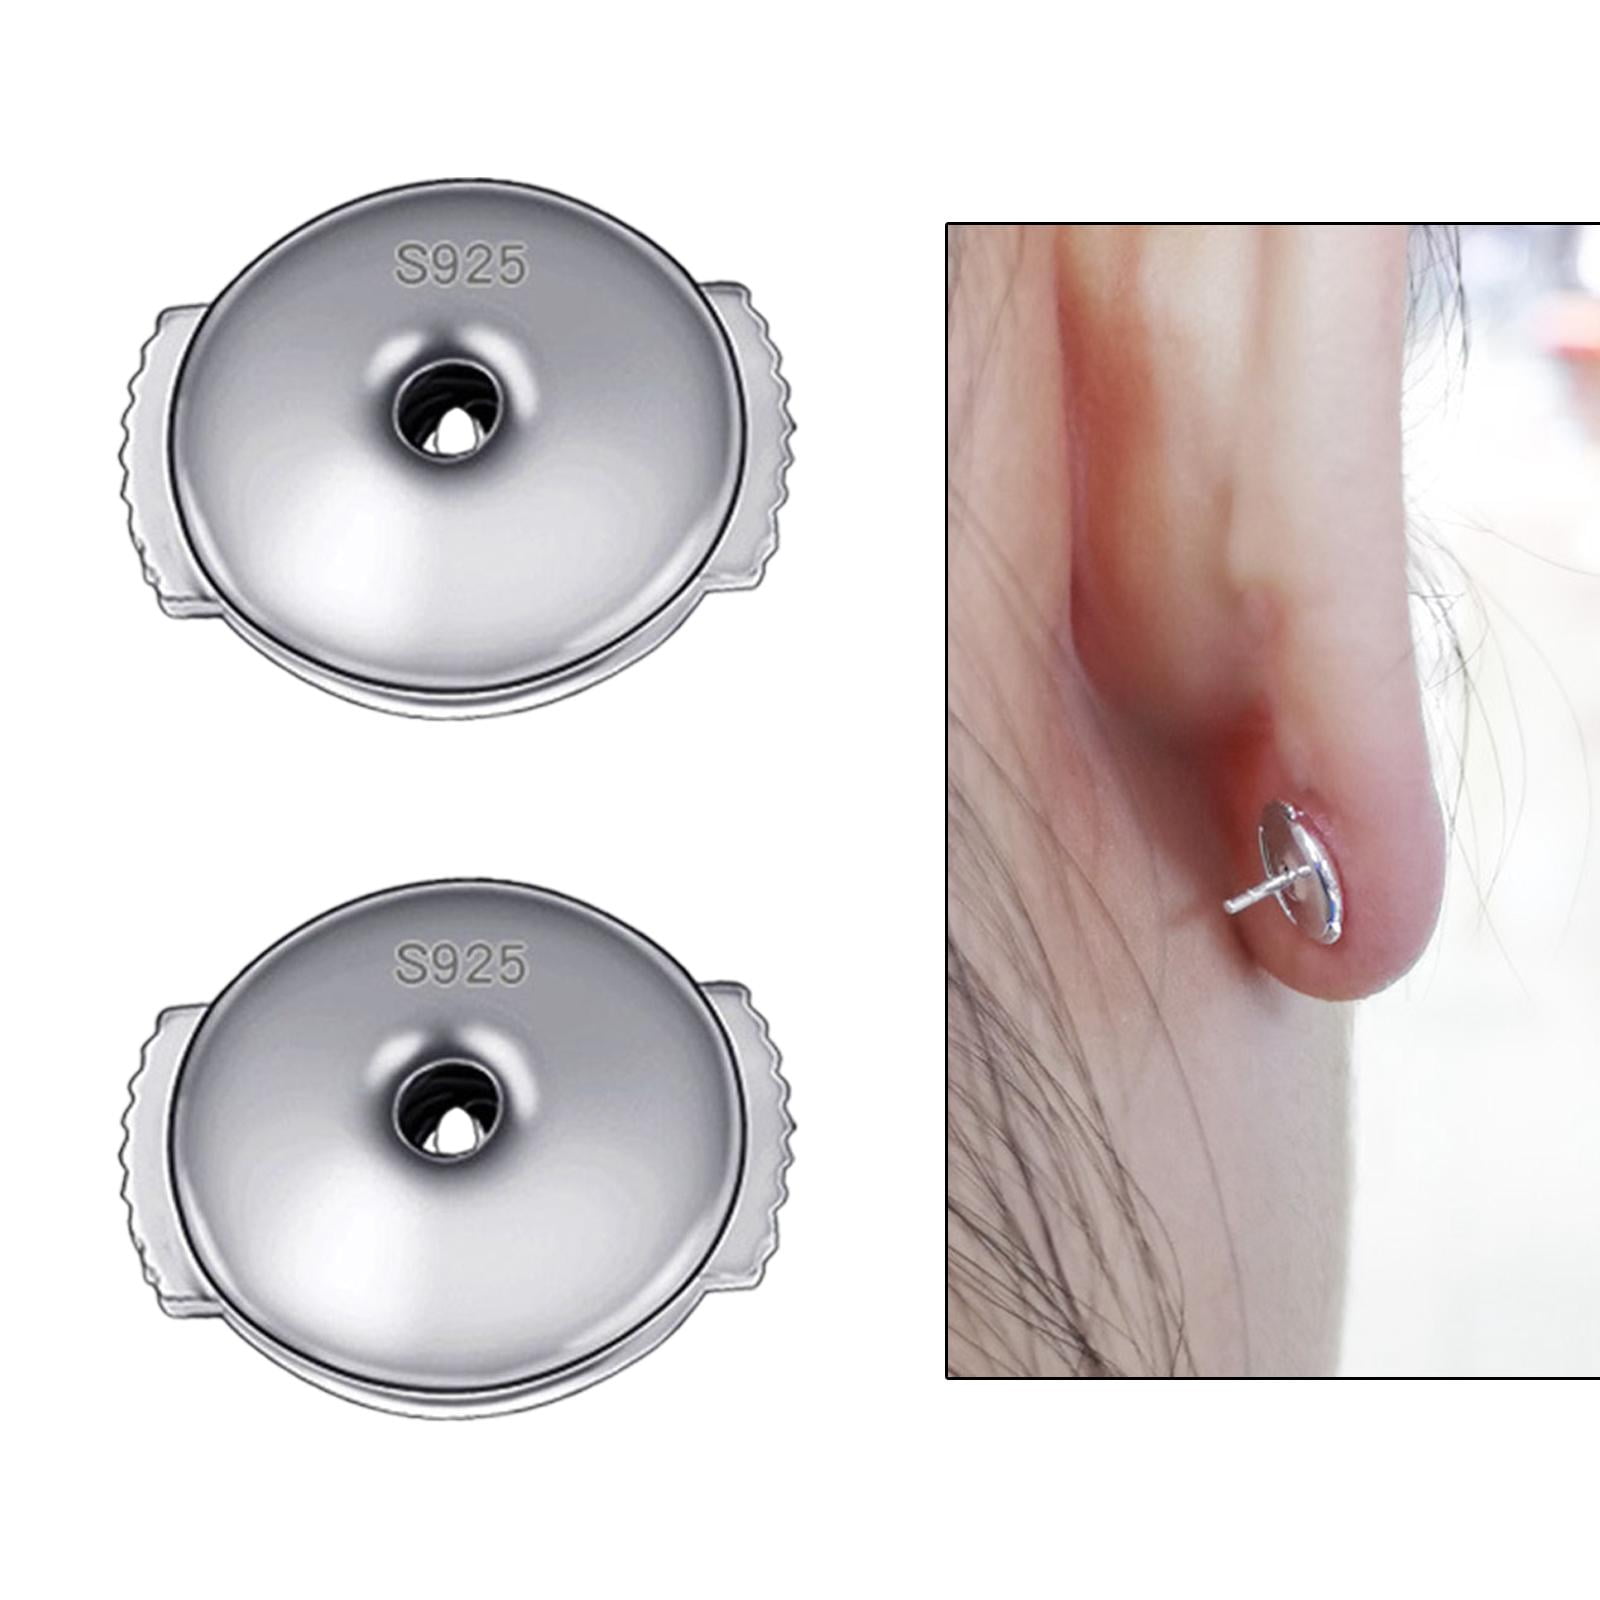 SANNIX 30pcs/15 Pairs Silver Earring Backs Replacement Secure Ear Lockings, Women's